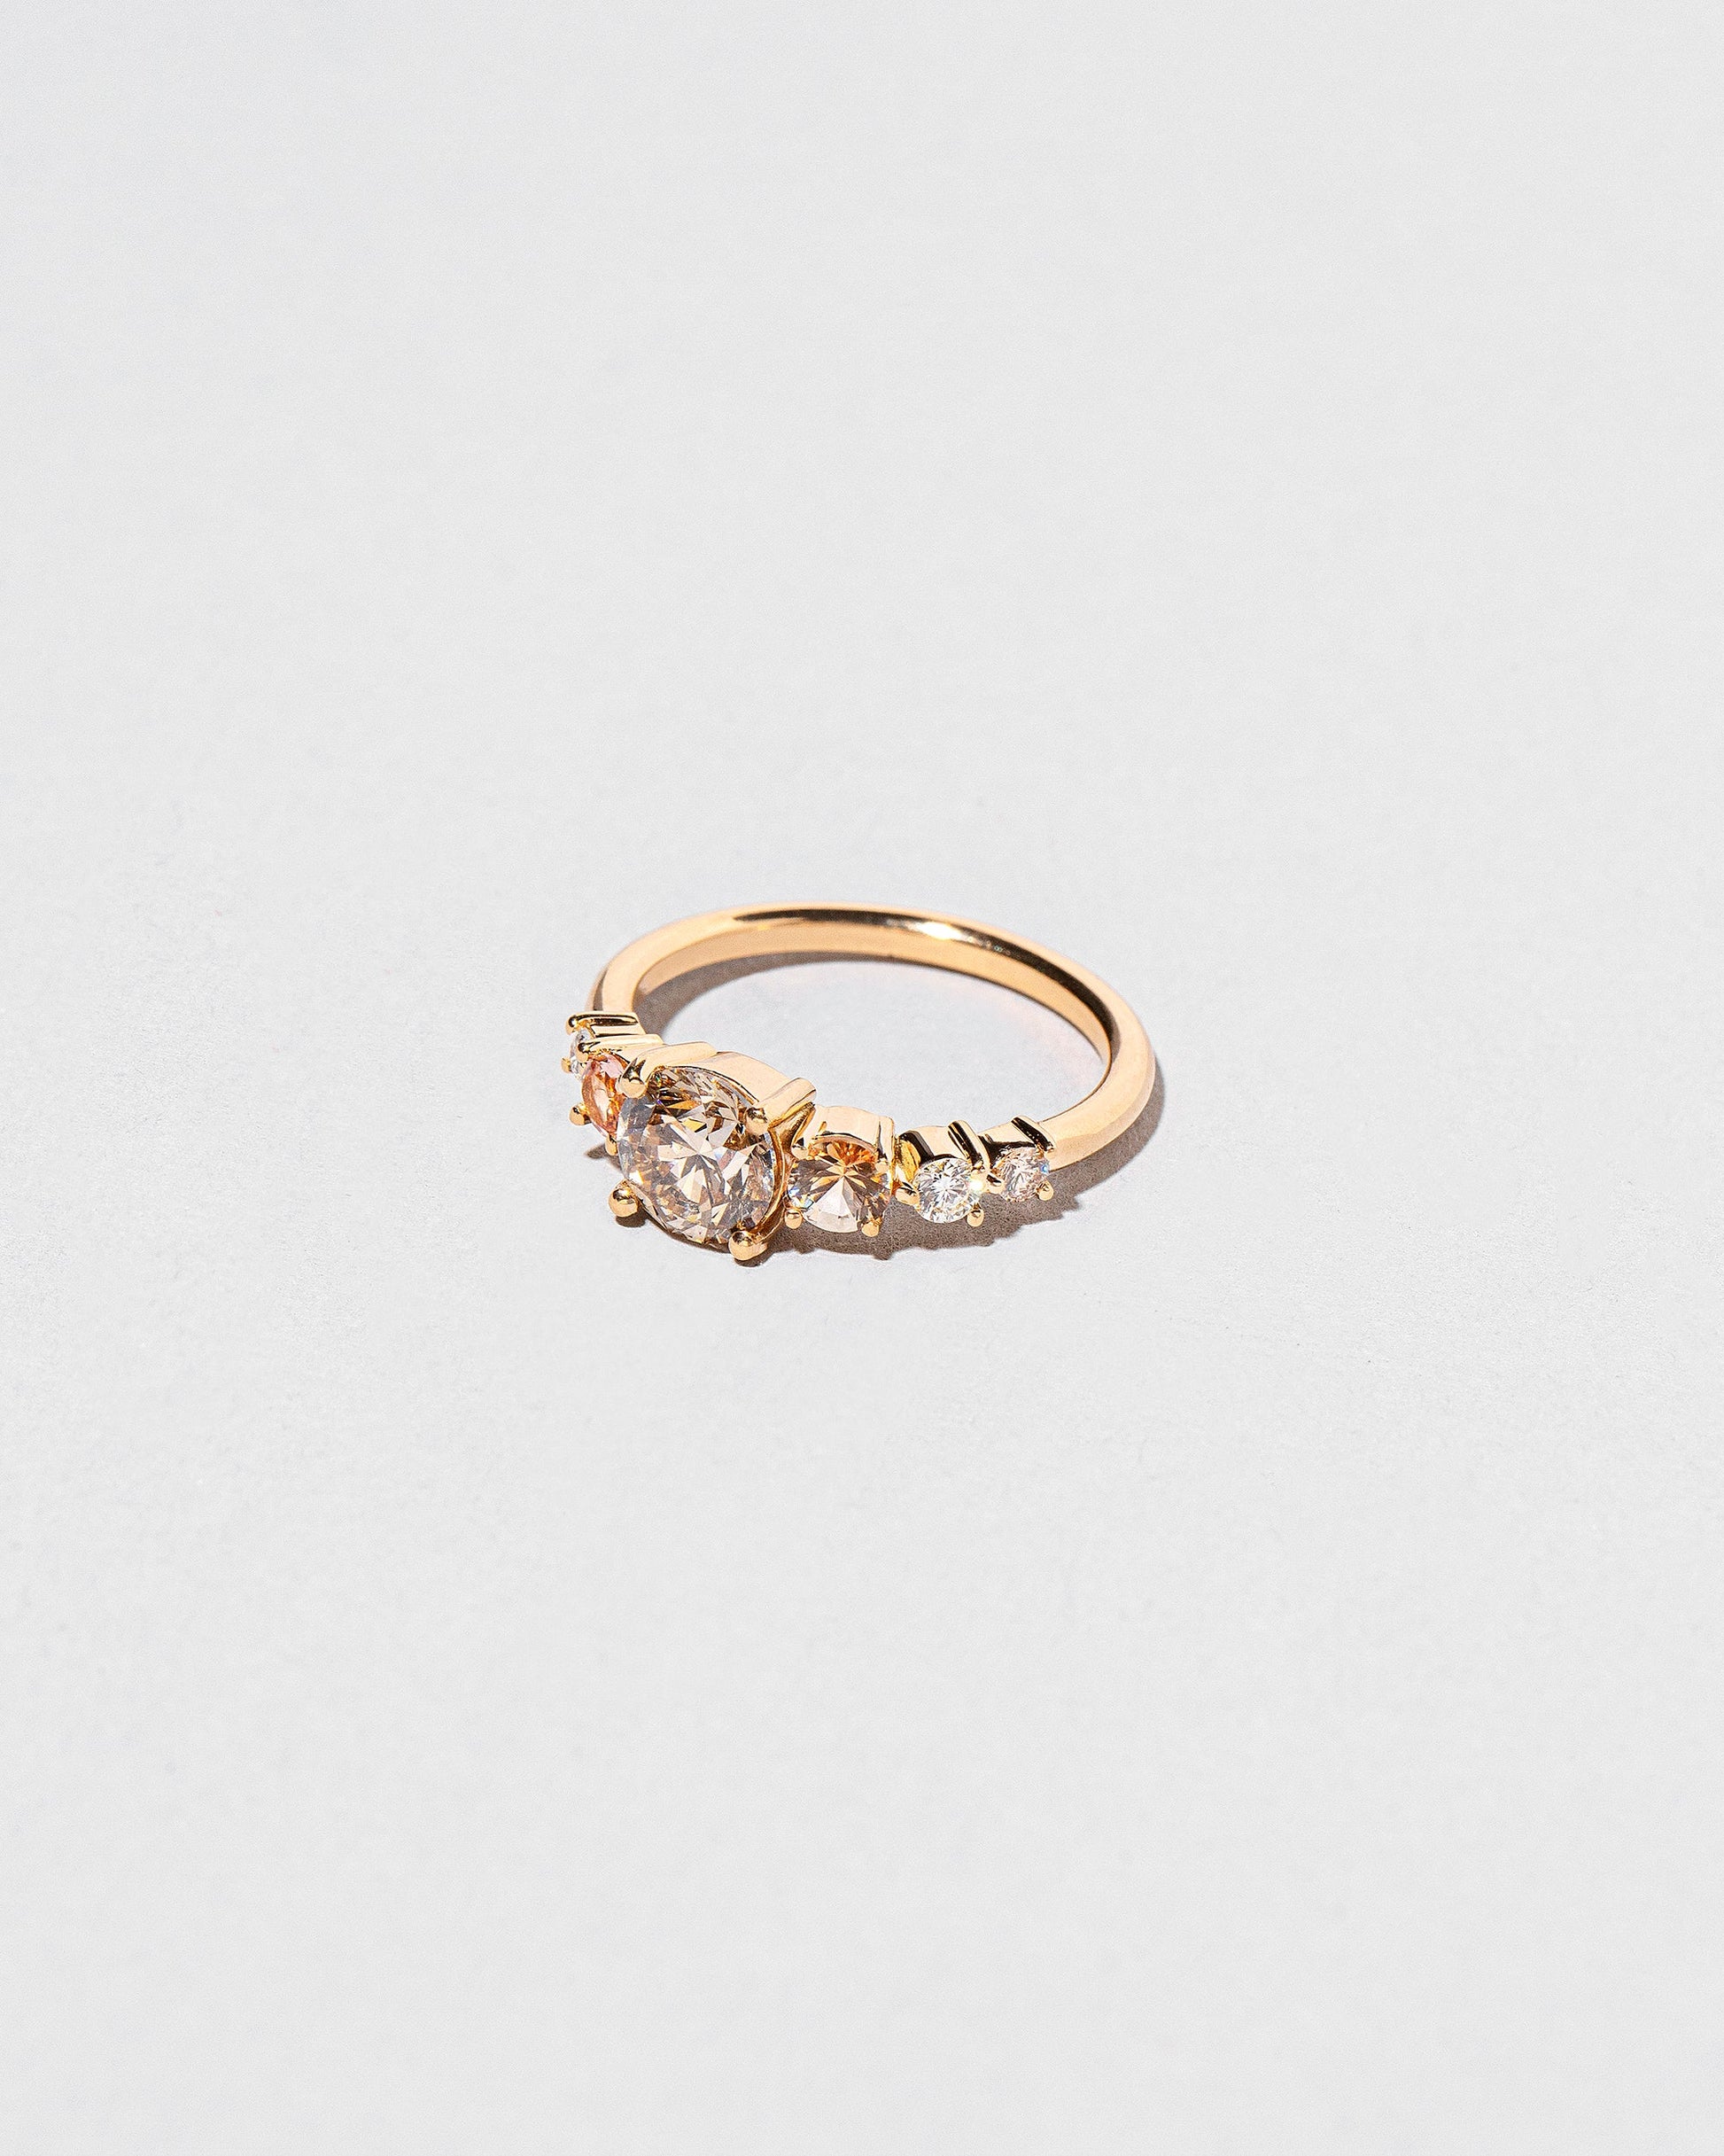  Capella Ring - Champagne Diamond on light color background